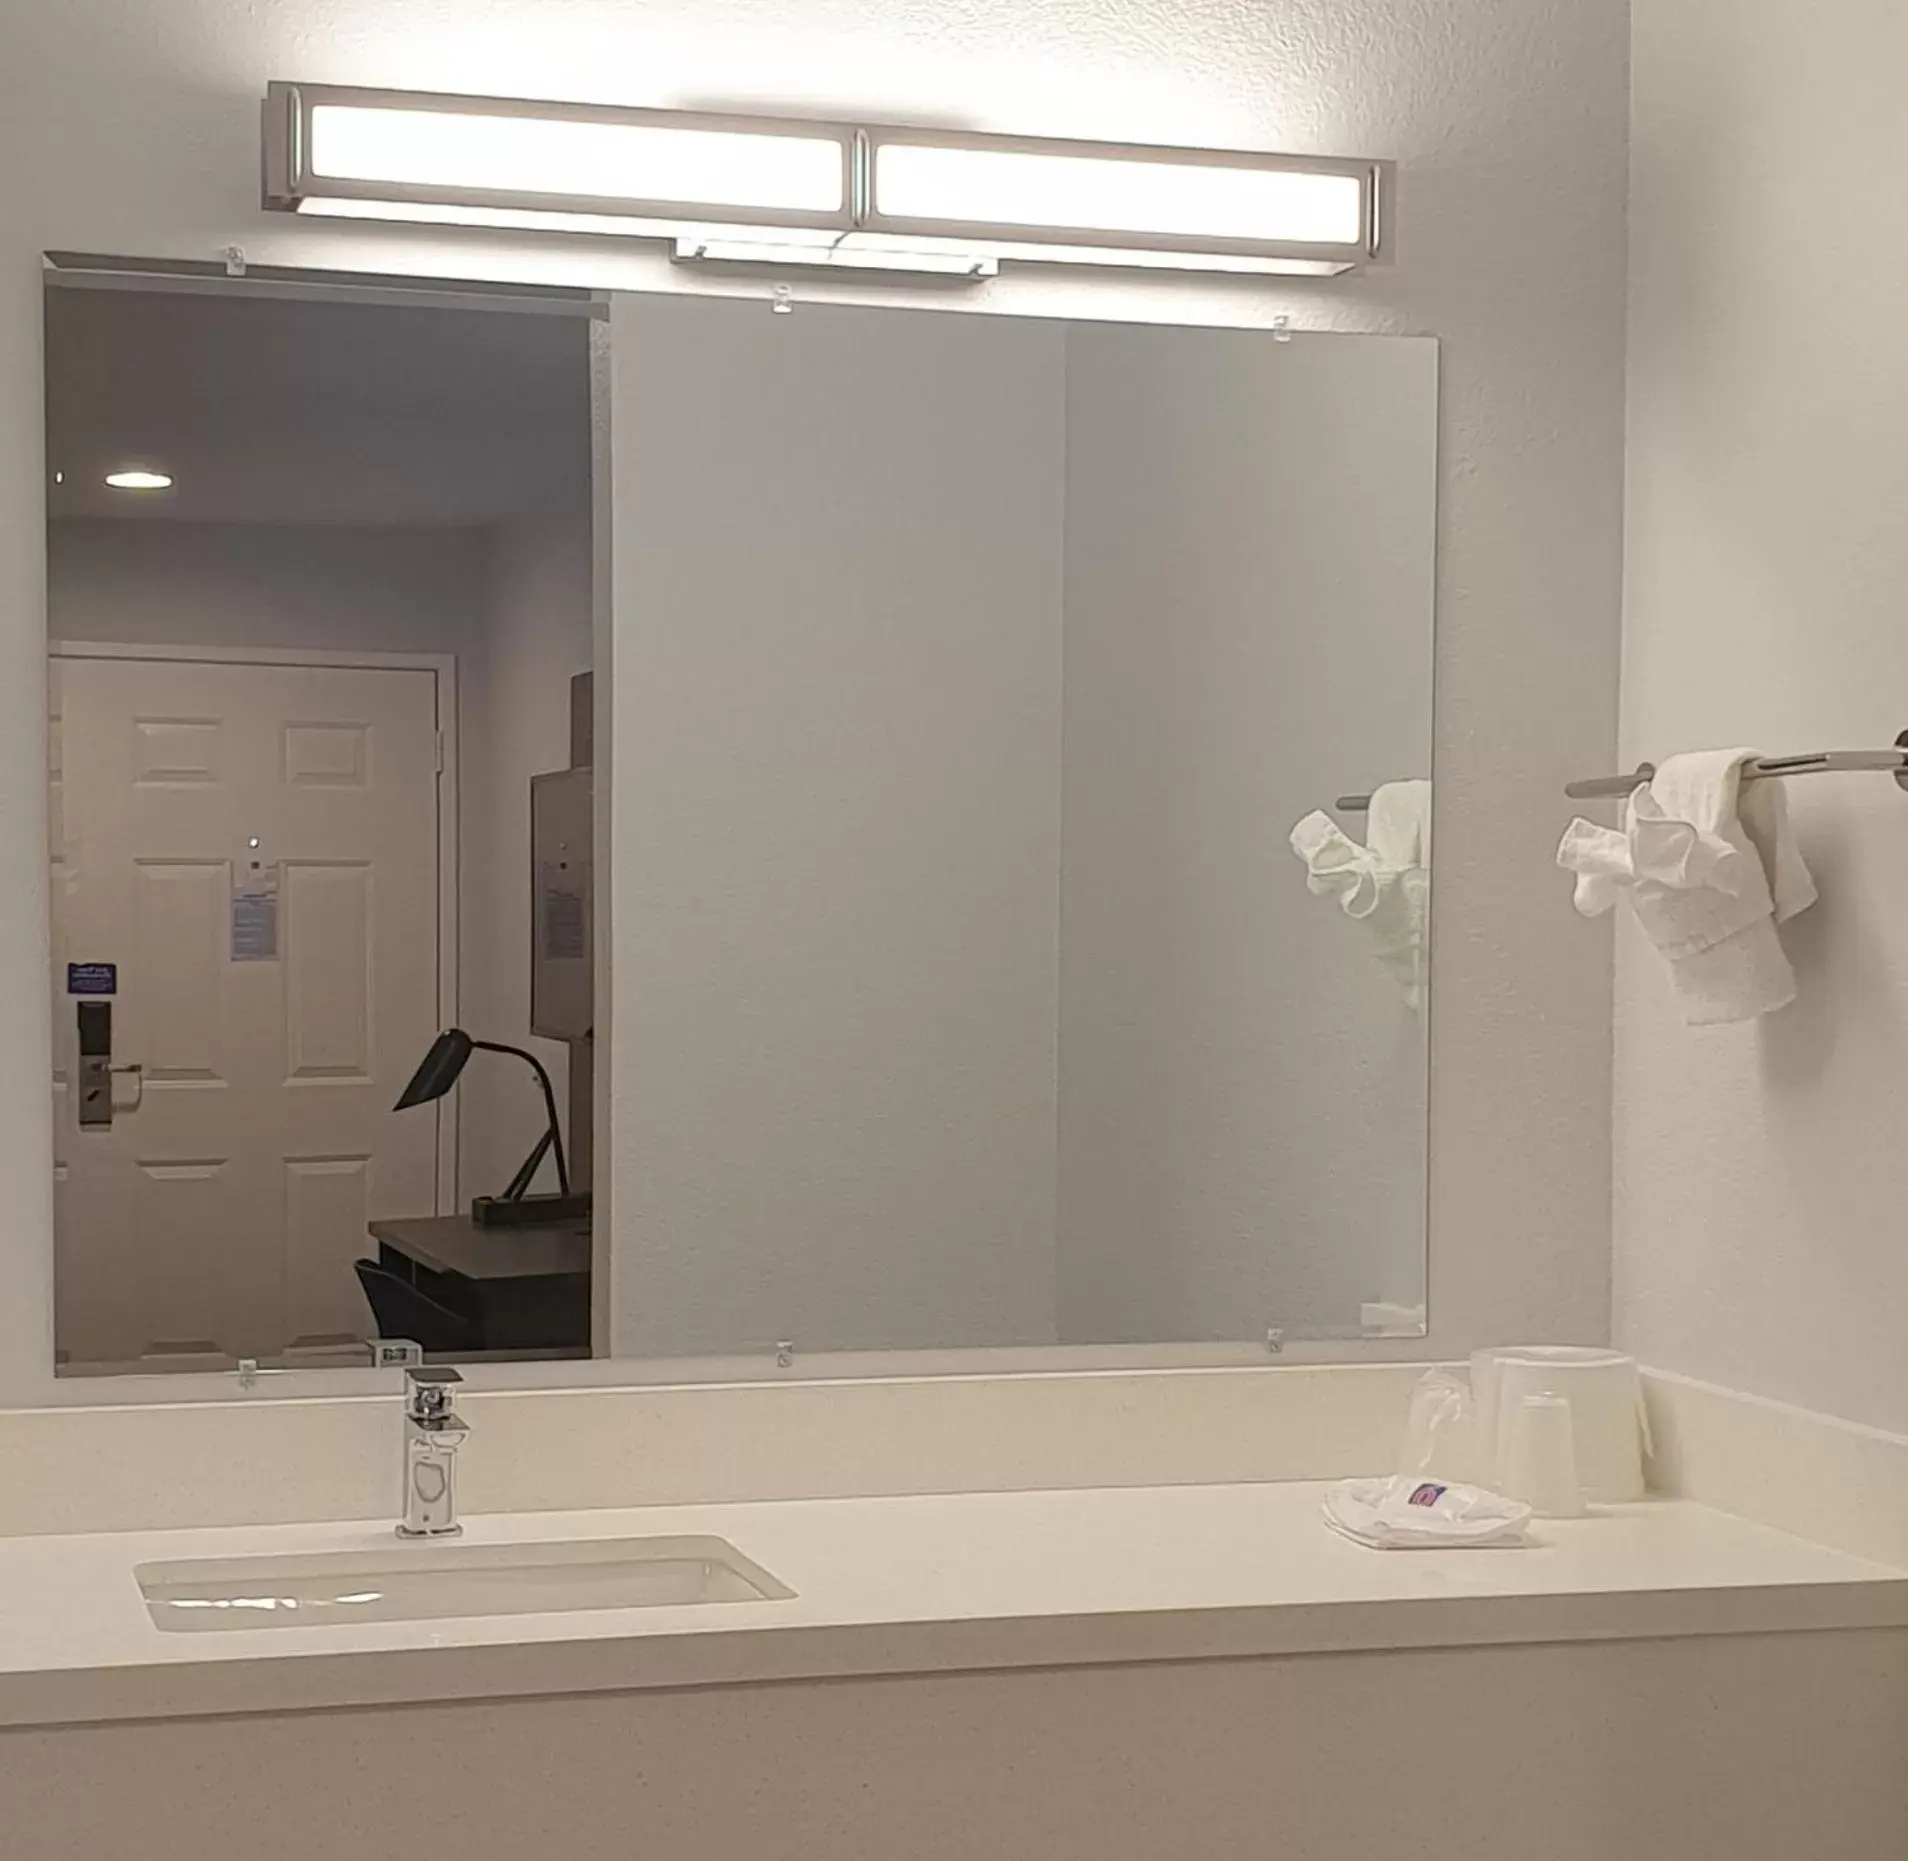 Area and facilities, Bathroom in Motel 6-Bellflower, CA - Los Angeles